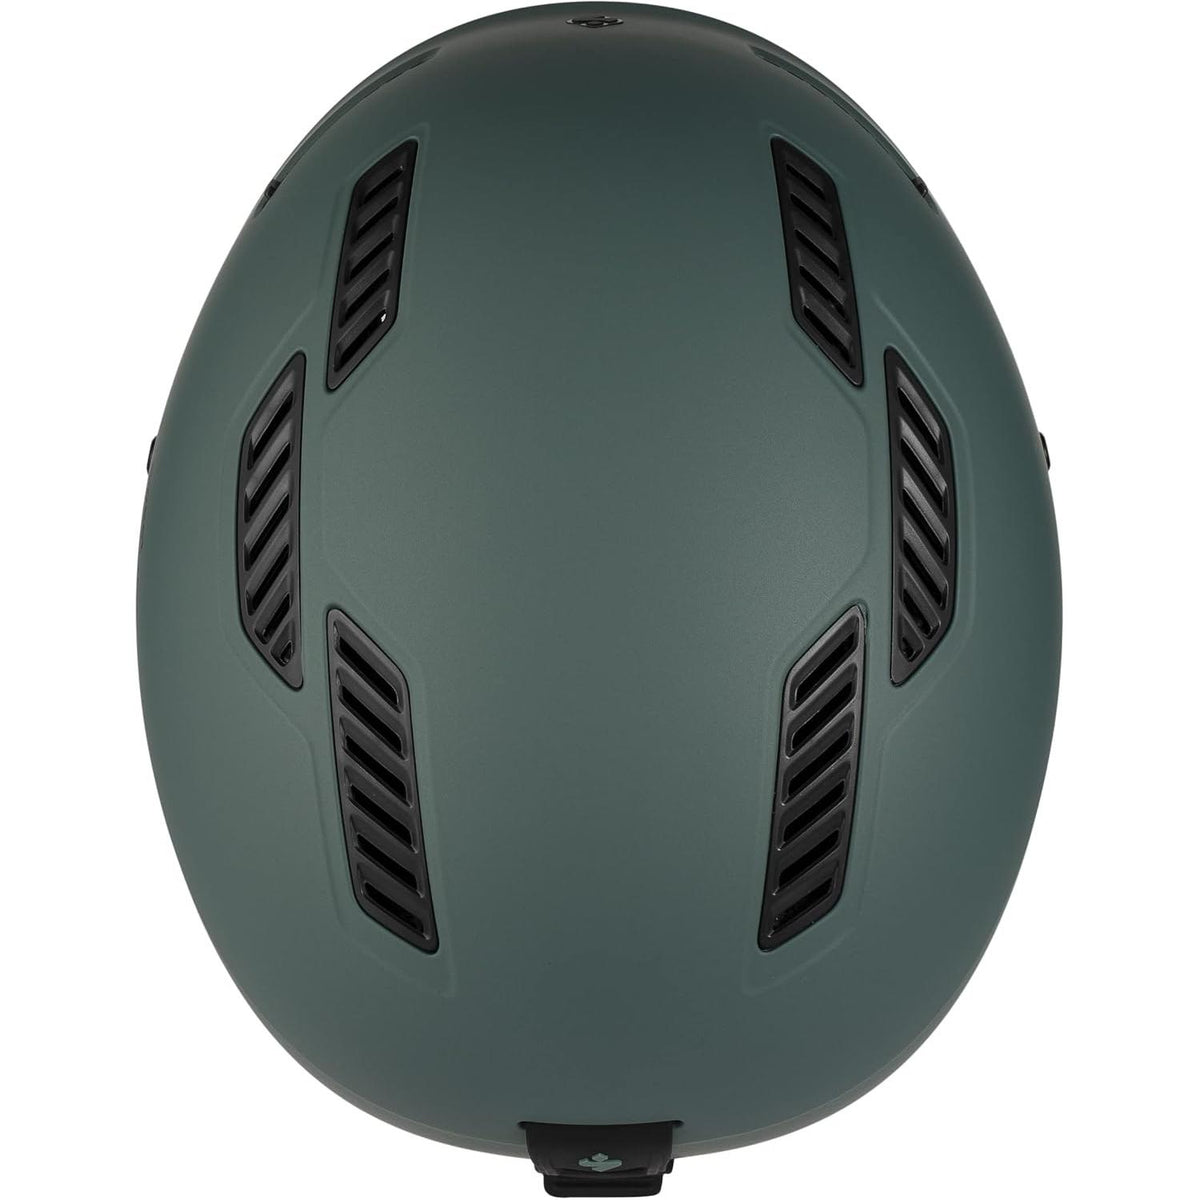 Sweet Protection Igniter 2Vi MIPS Helmet - Matte Sea Metallic - Large/X-Large